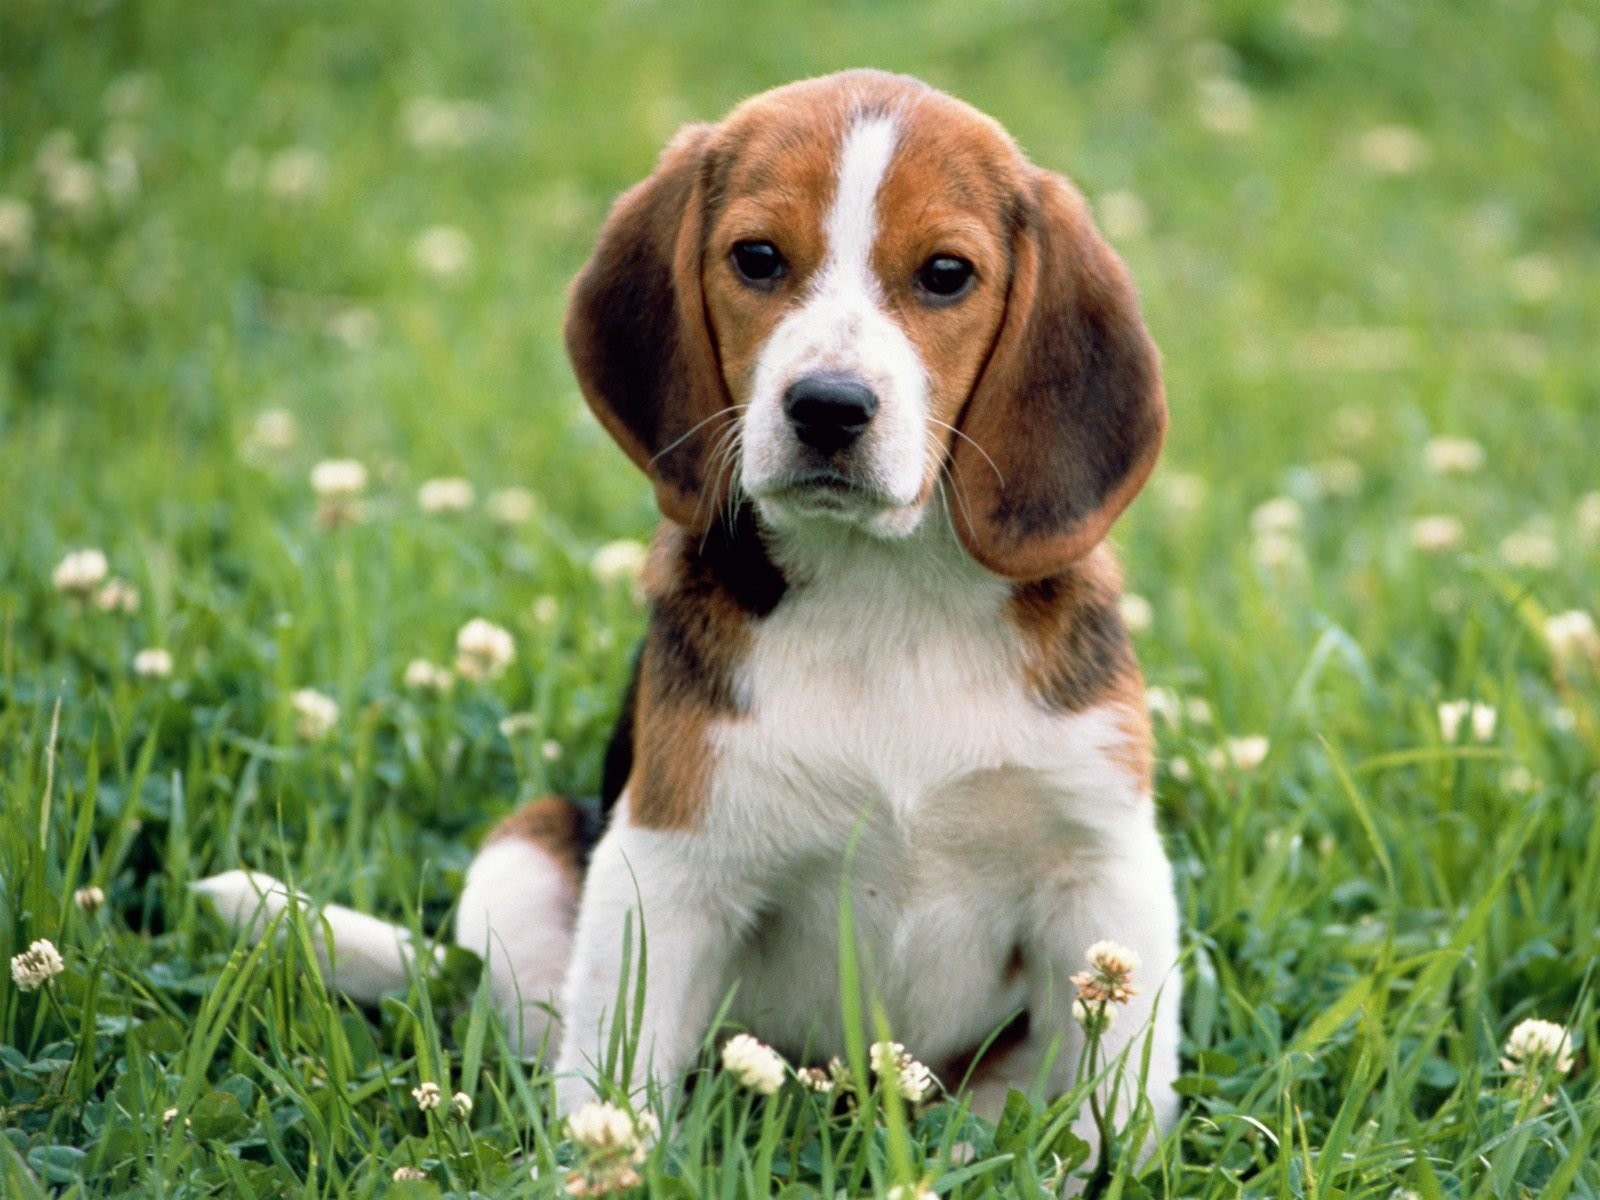 Cute Beagle Dog Full HD Wallpaper Image New Best Desktop